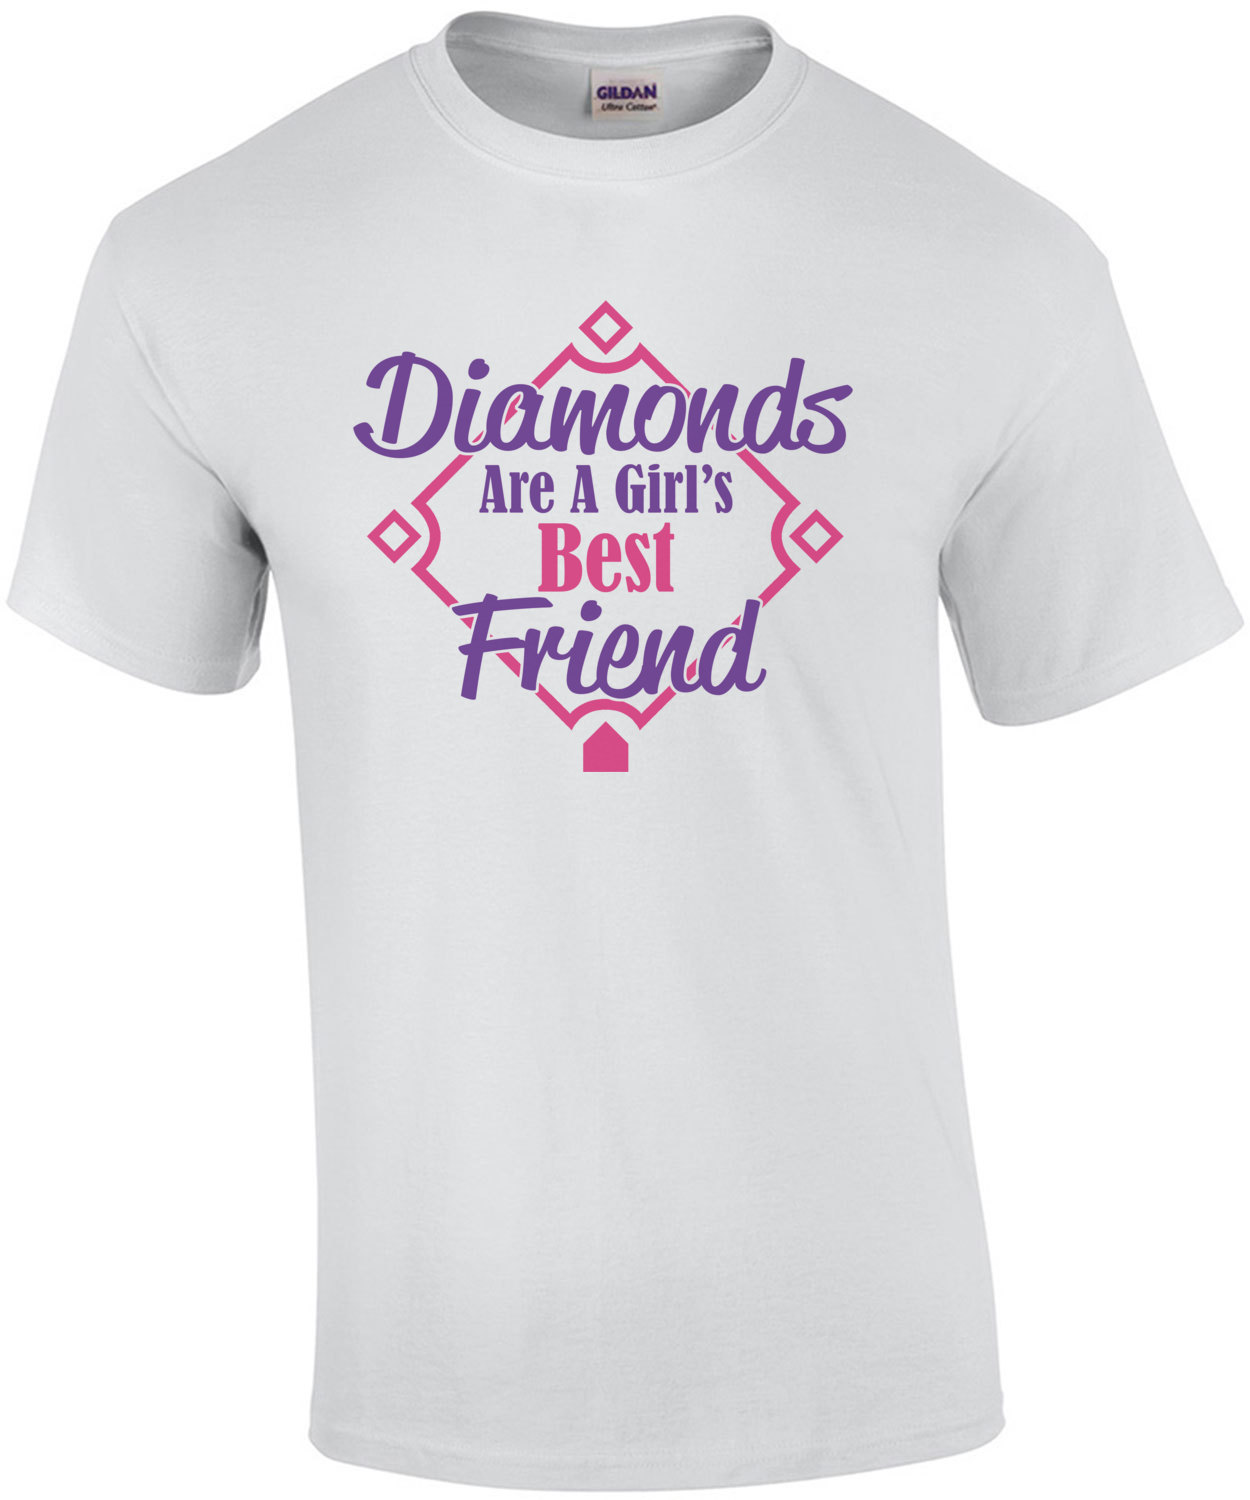 Diamonds Are A Boy's Best Friend!